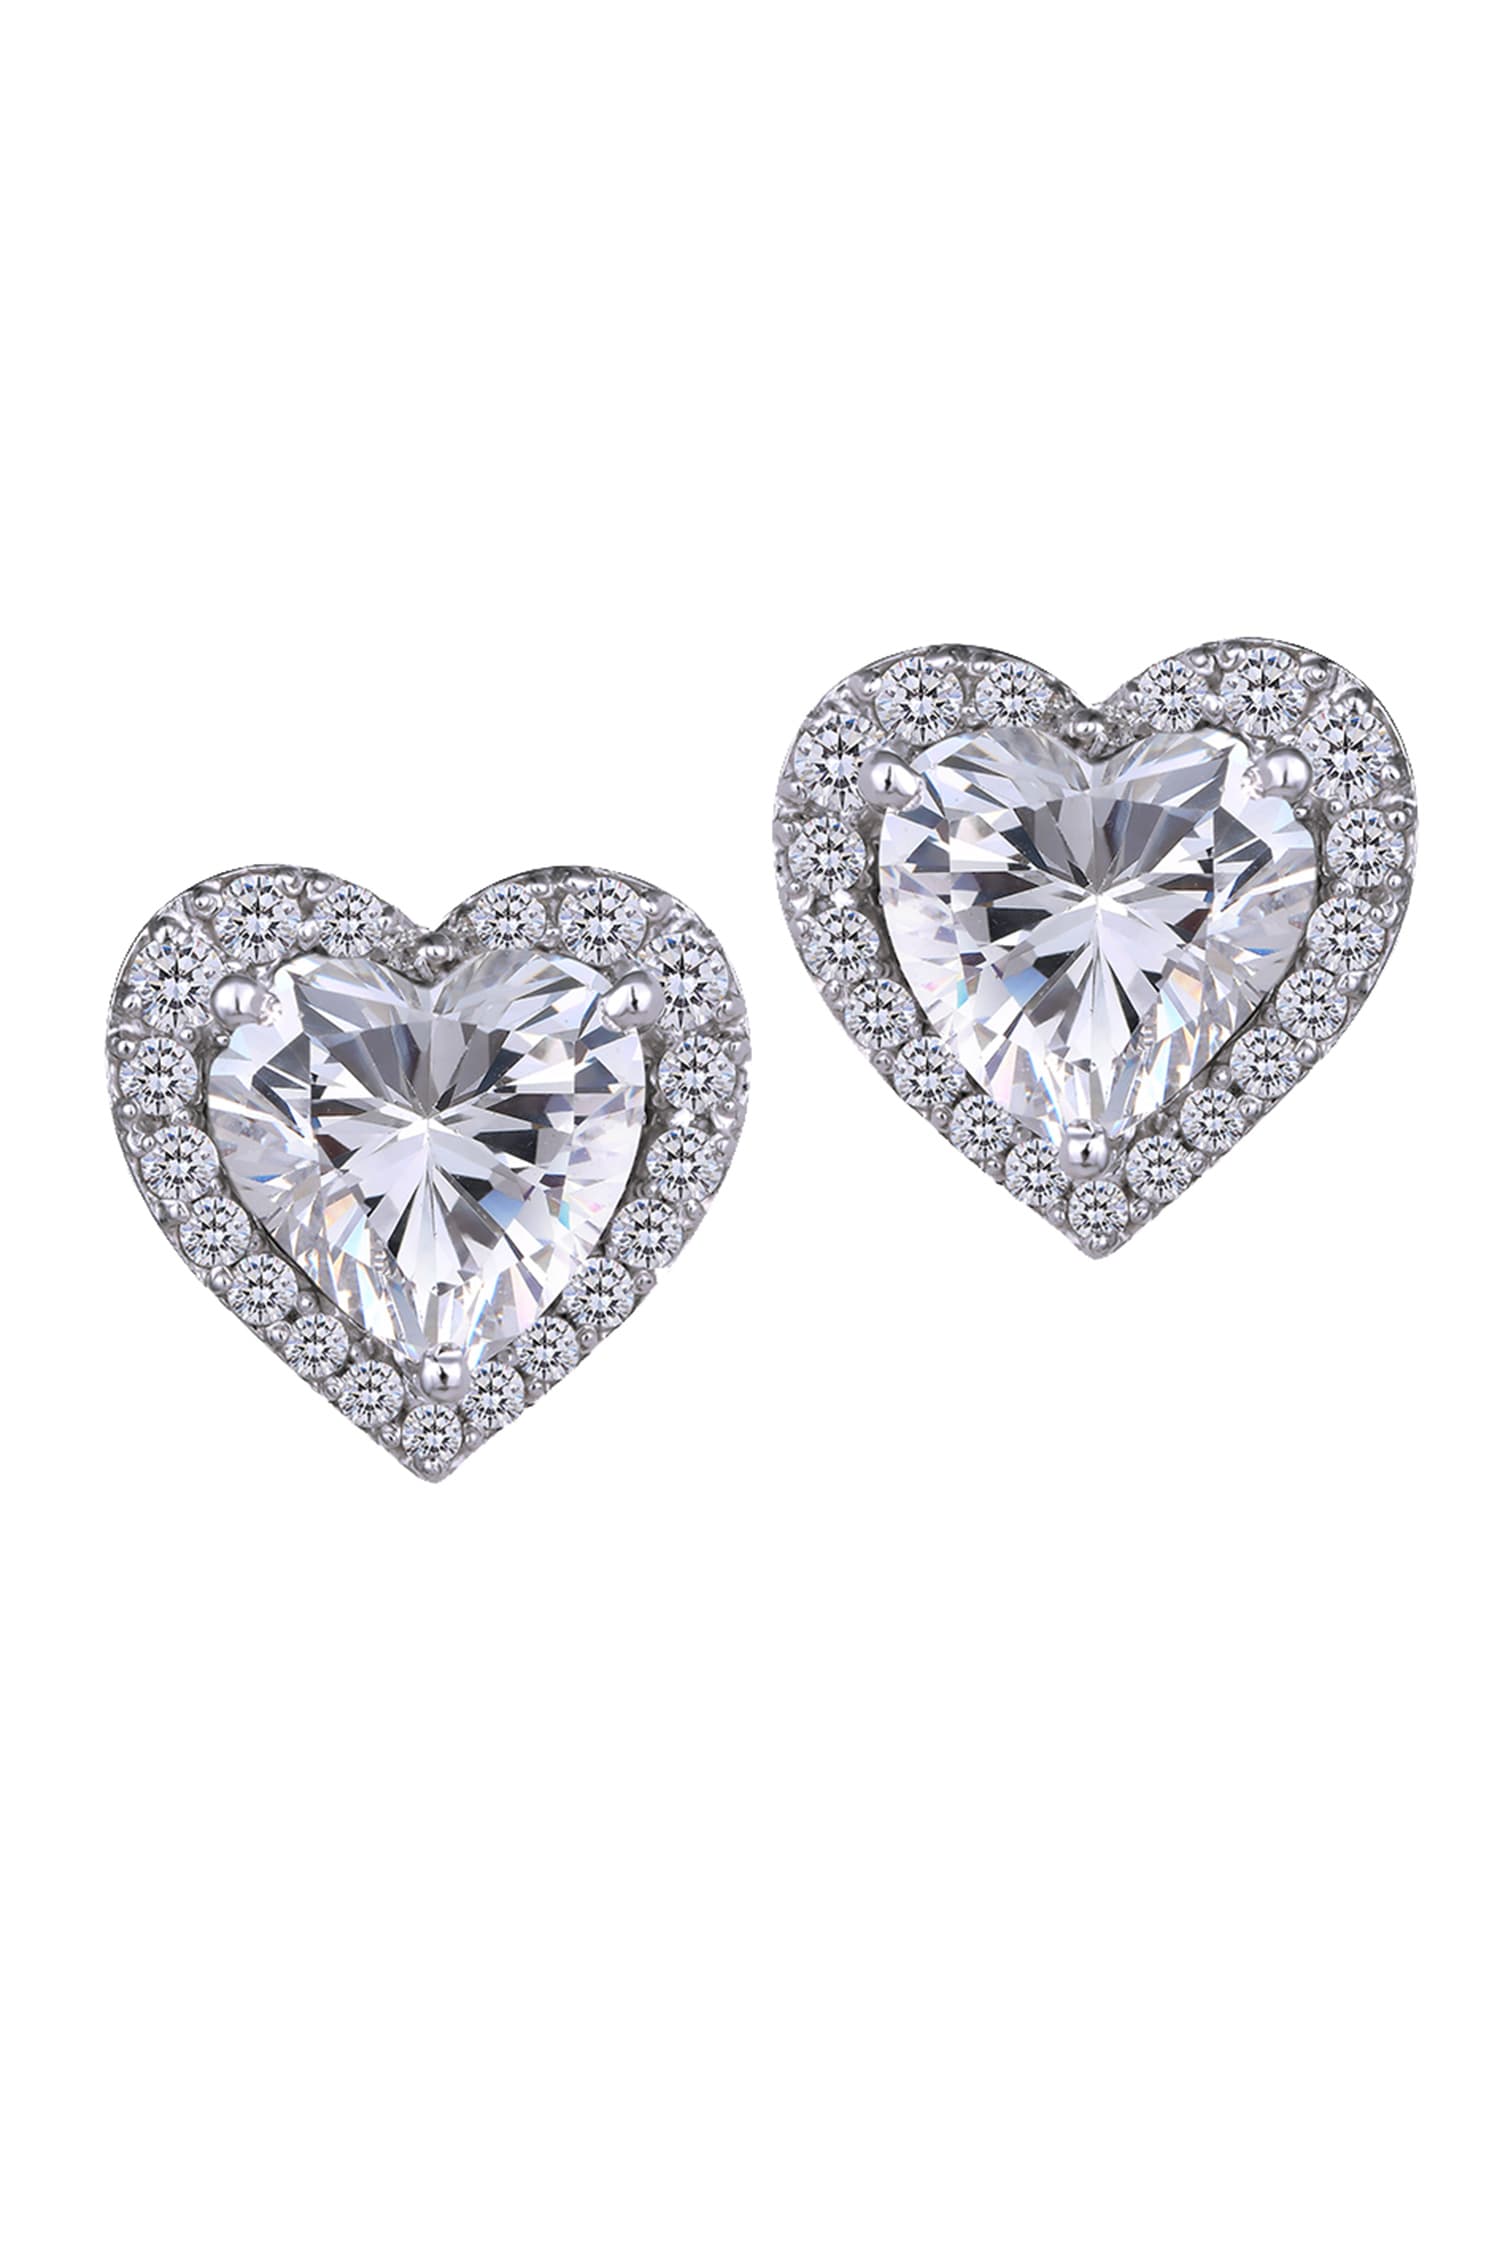 057057 Ct Heart Cut Diamond Stud EarringsWhite Gold Diamond Earring